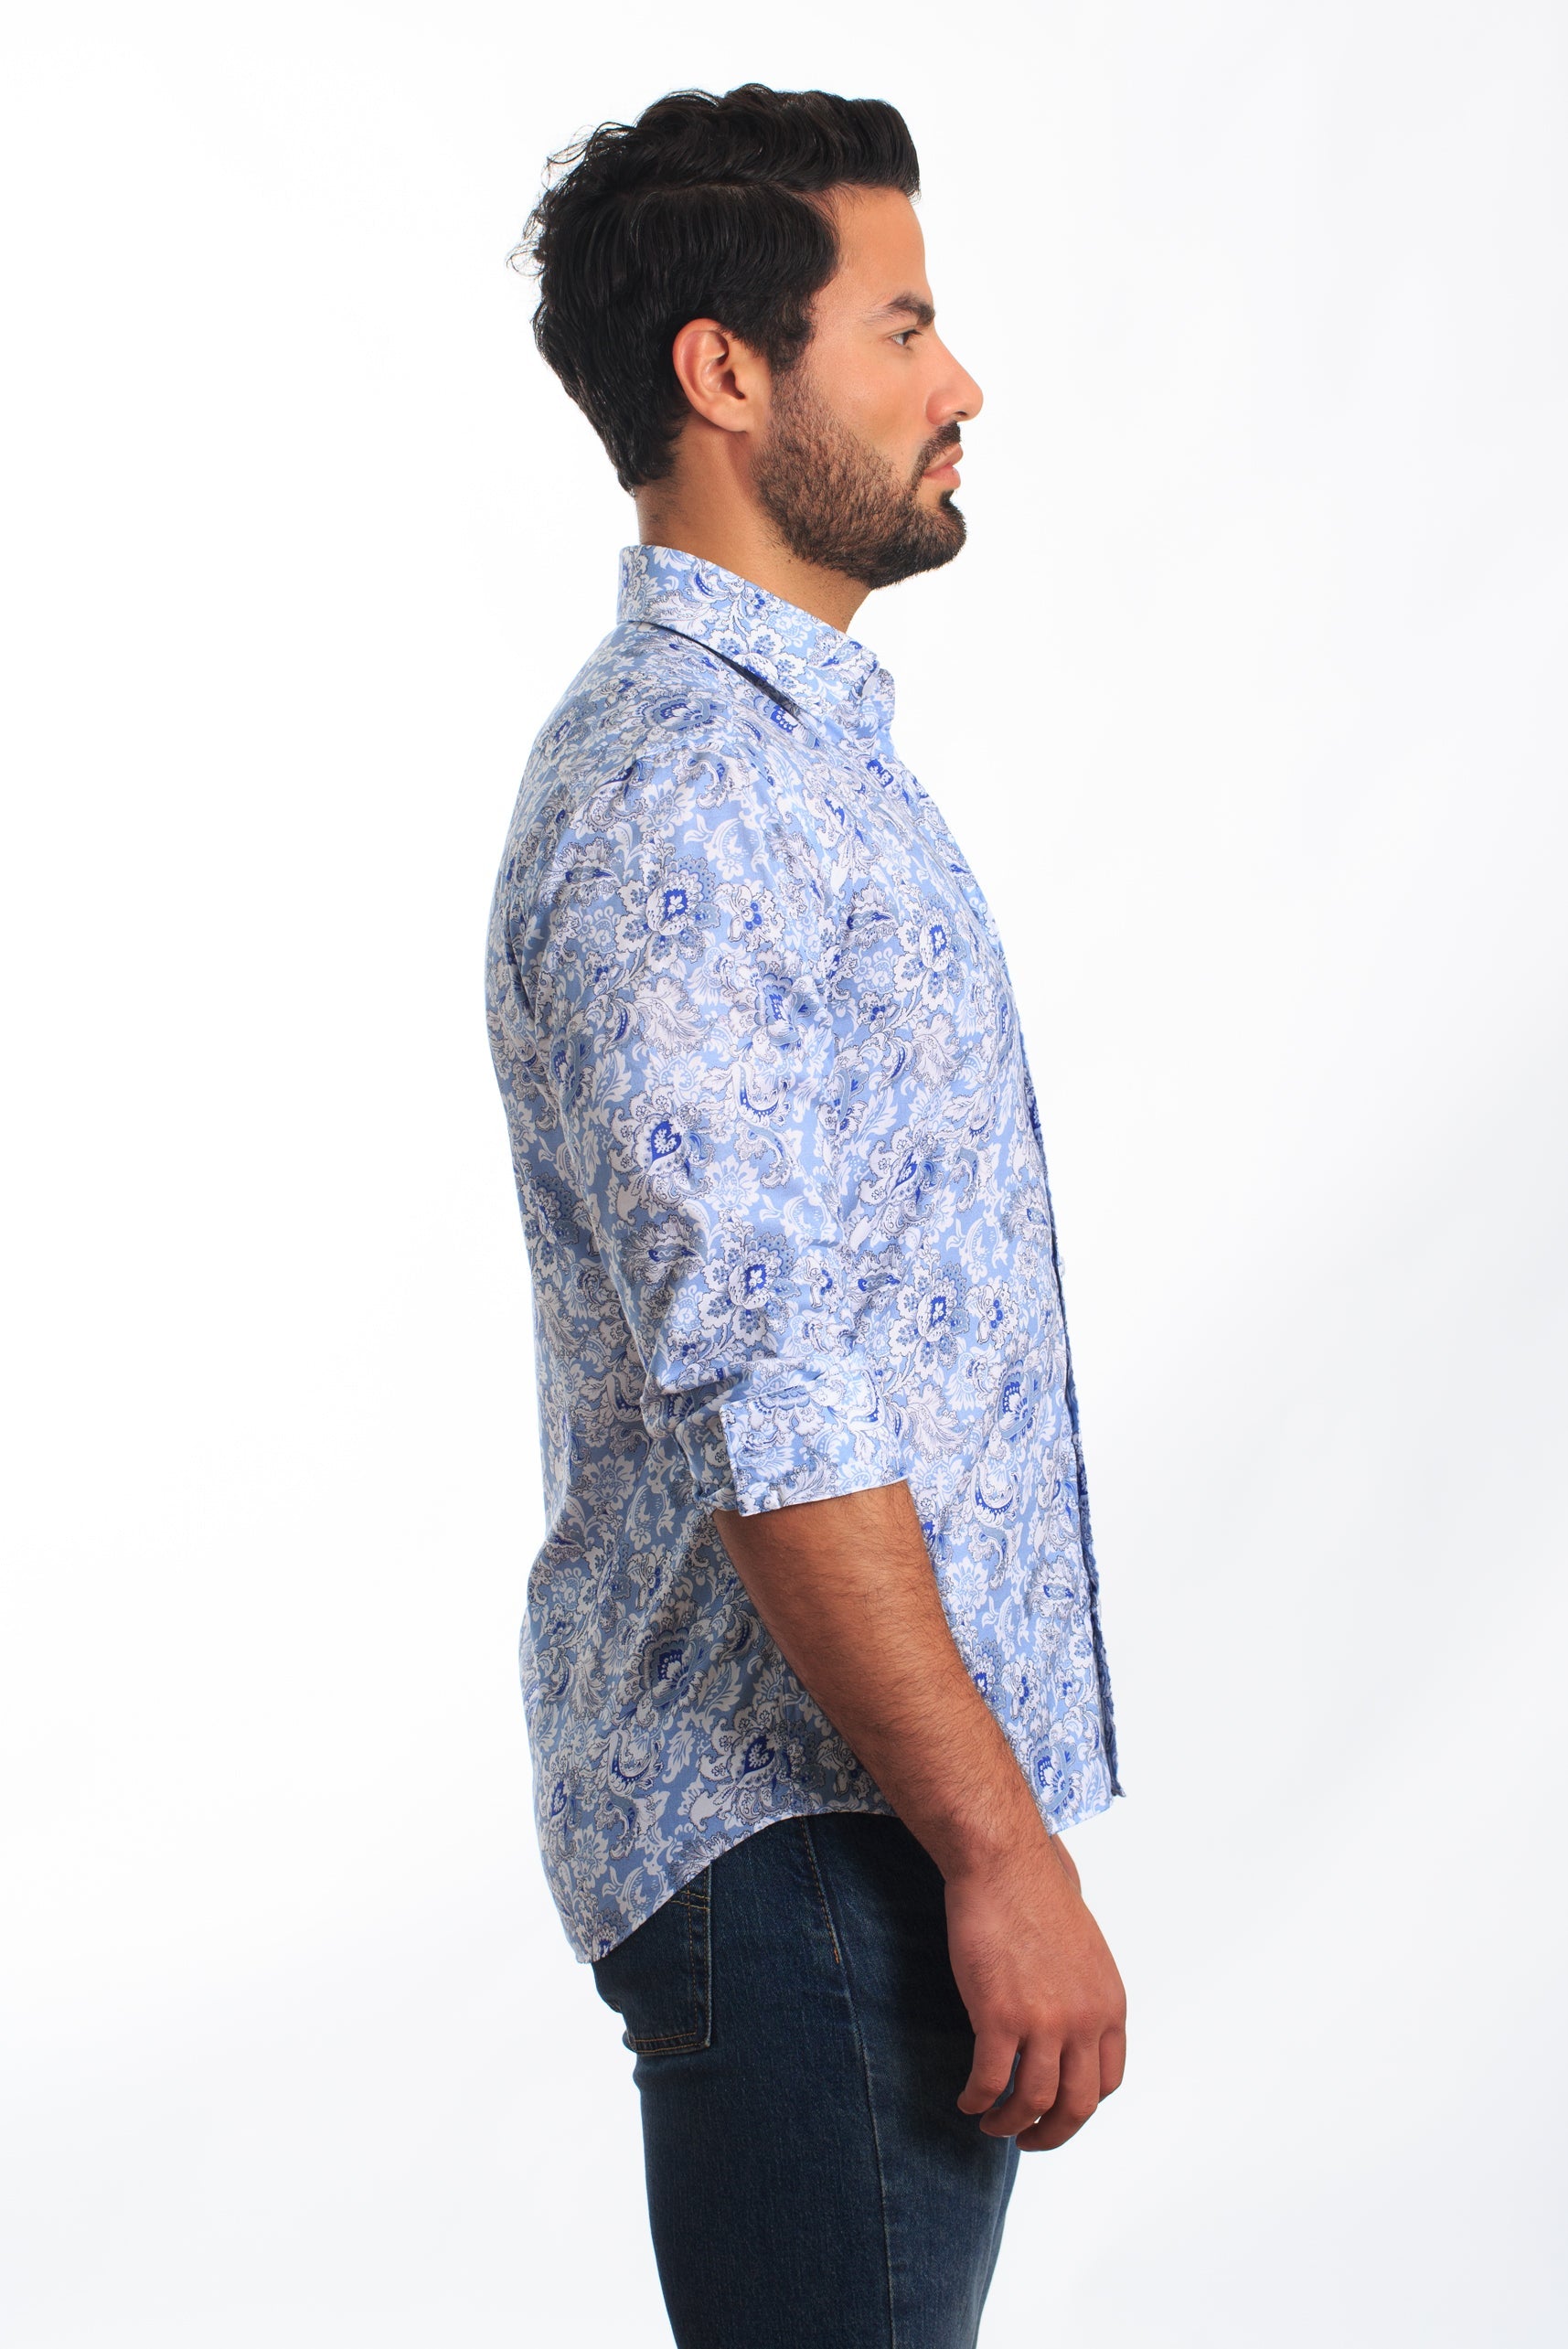 Pastel Blue Long Sleeve Shirt T-6832 Side